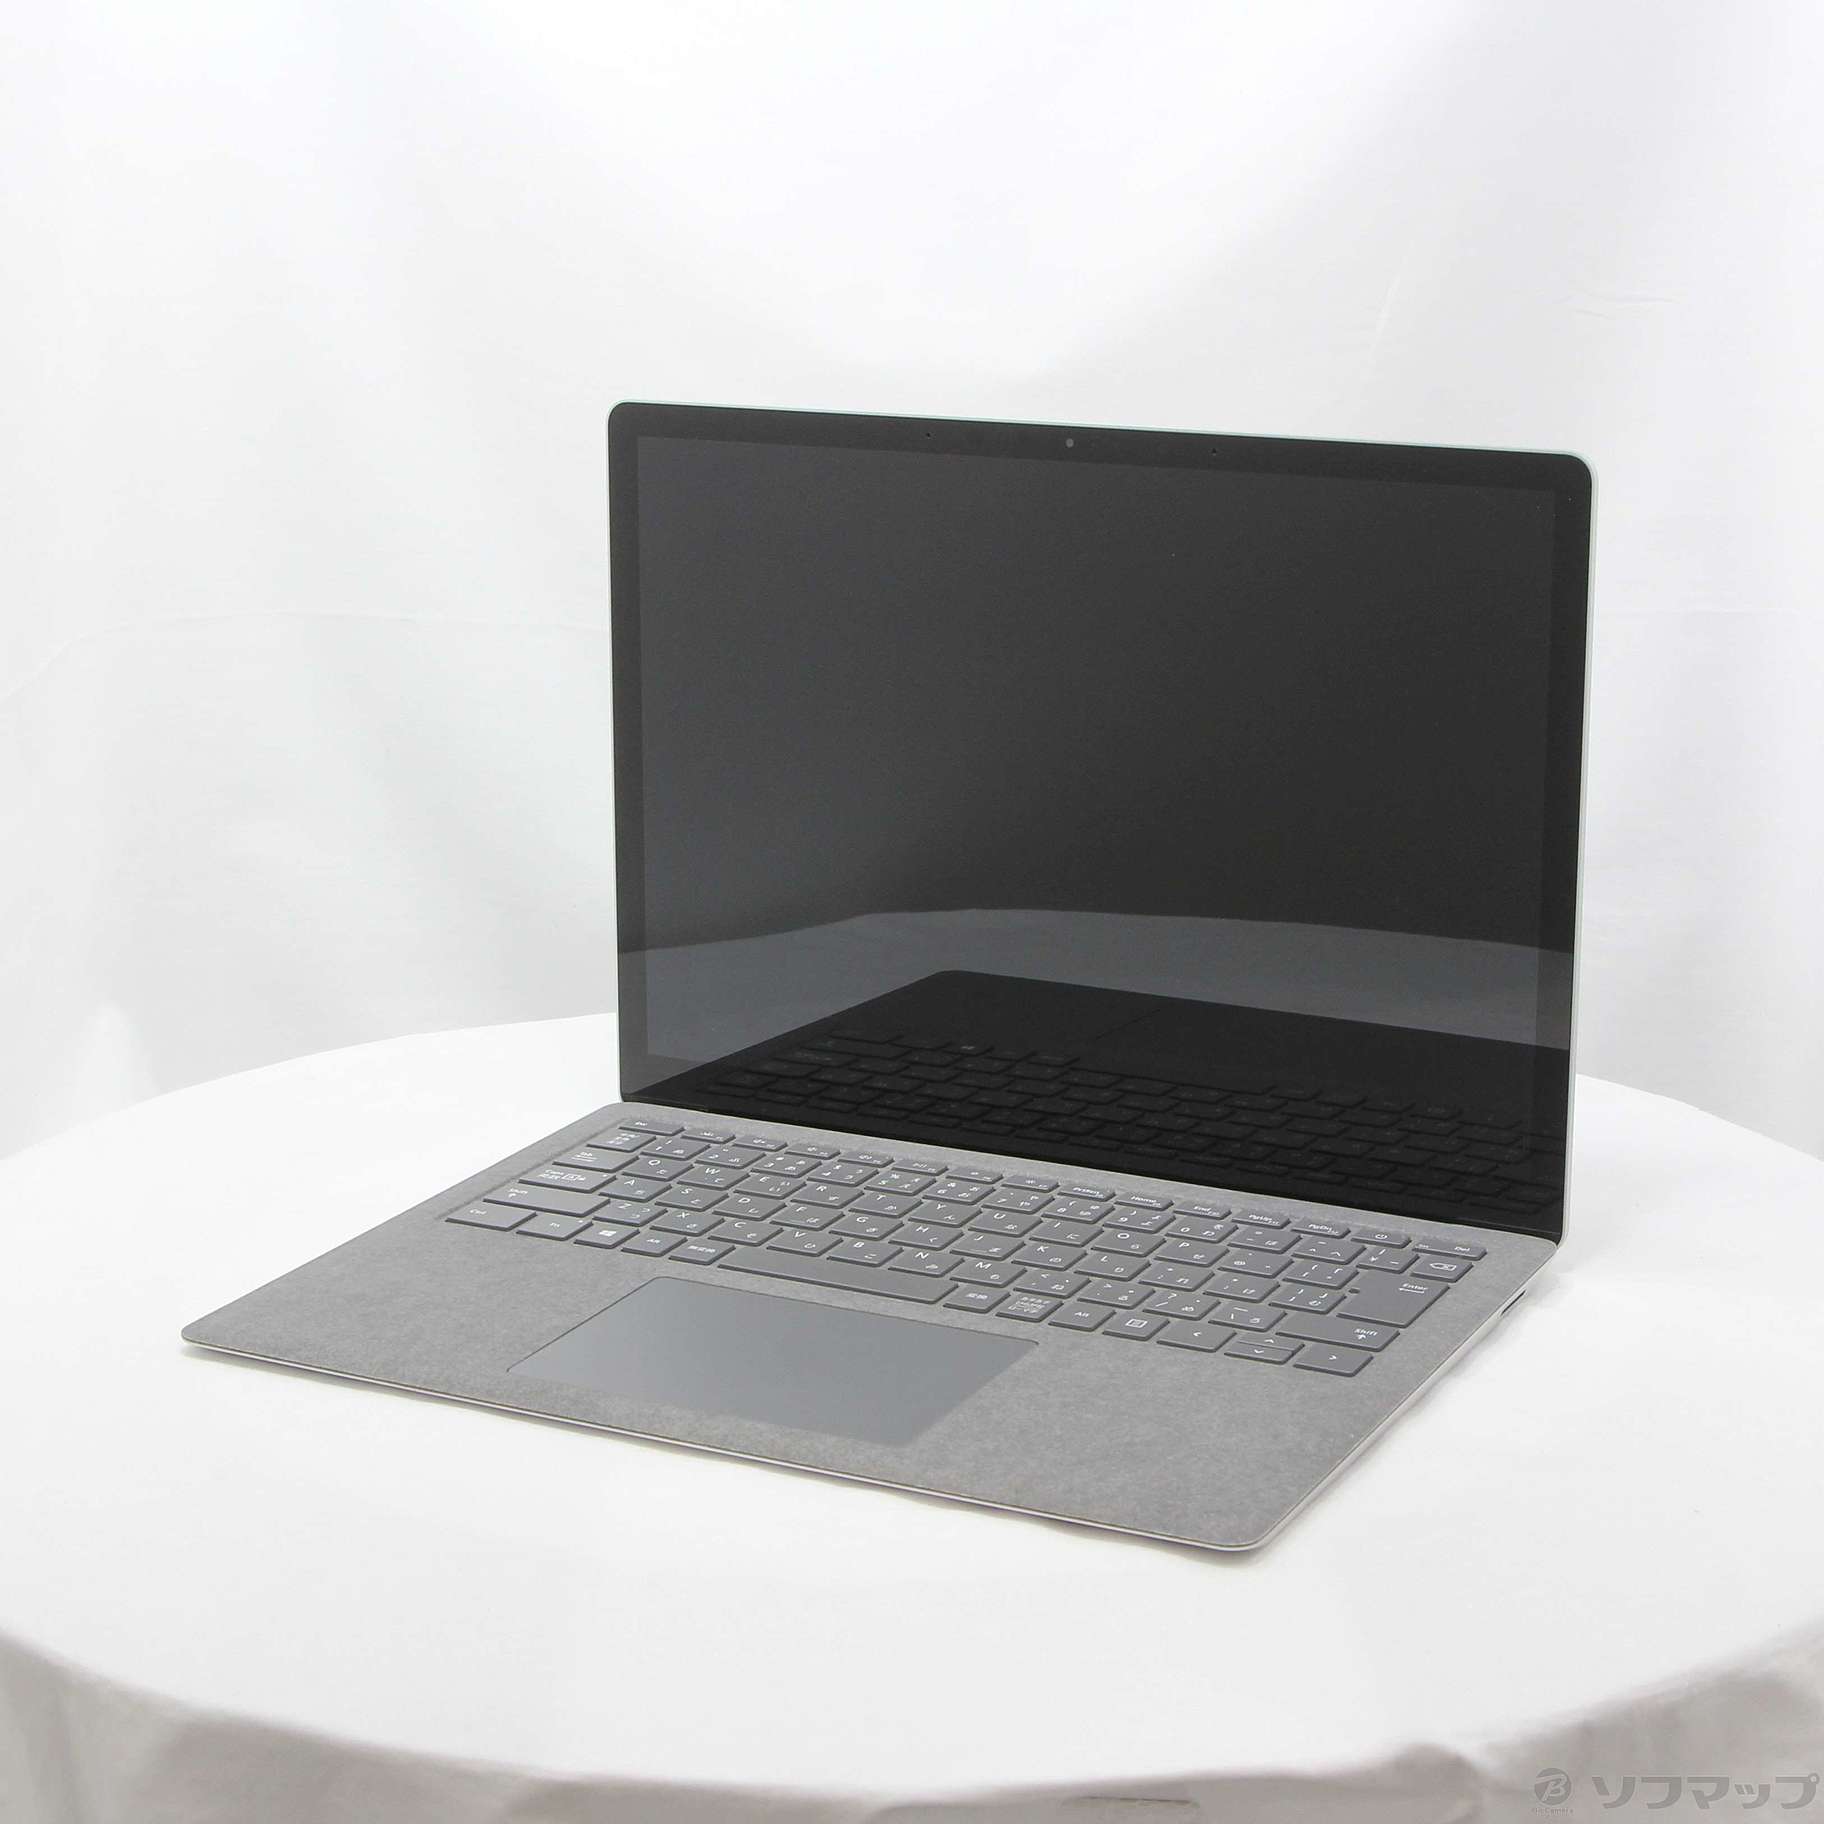 Surface Laptop 3 〔Core i5／8GB／SSD128GB〕 VGY-00018 プラチナ 〔Windows 10〕